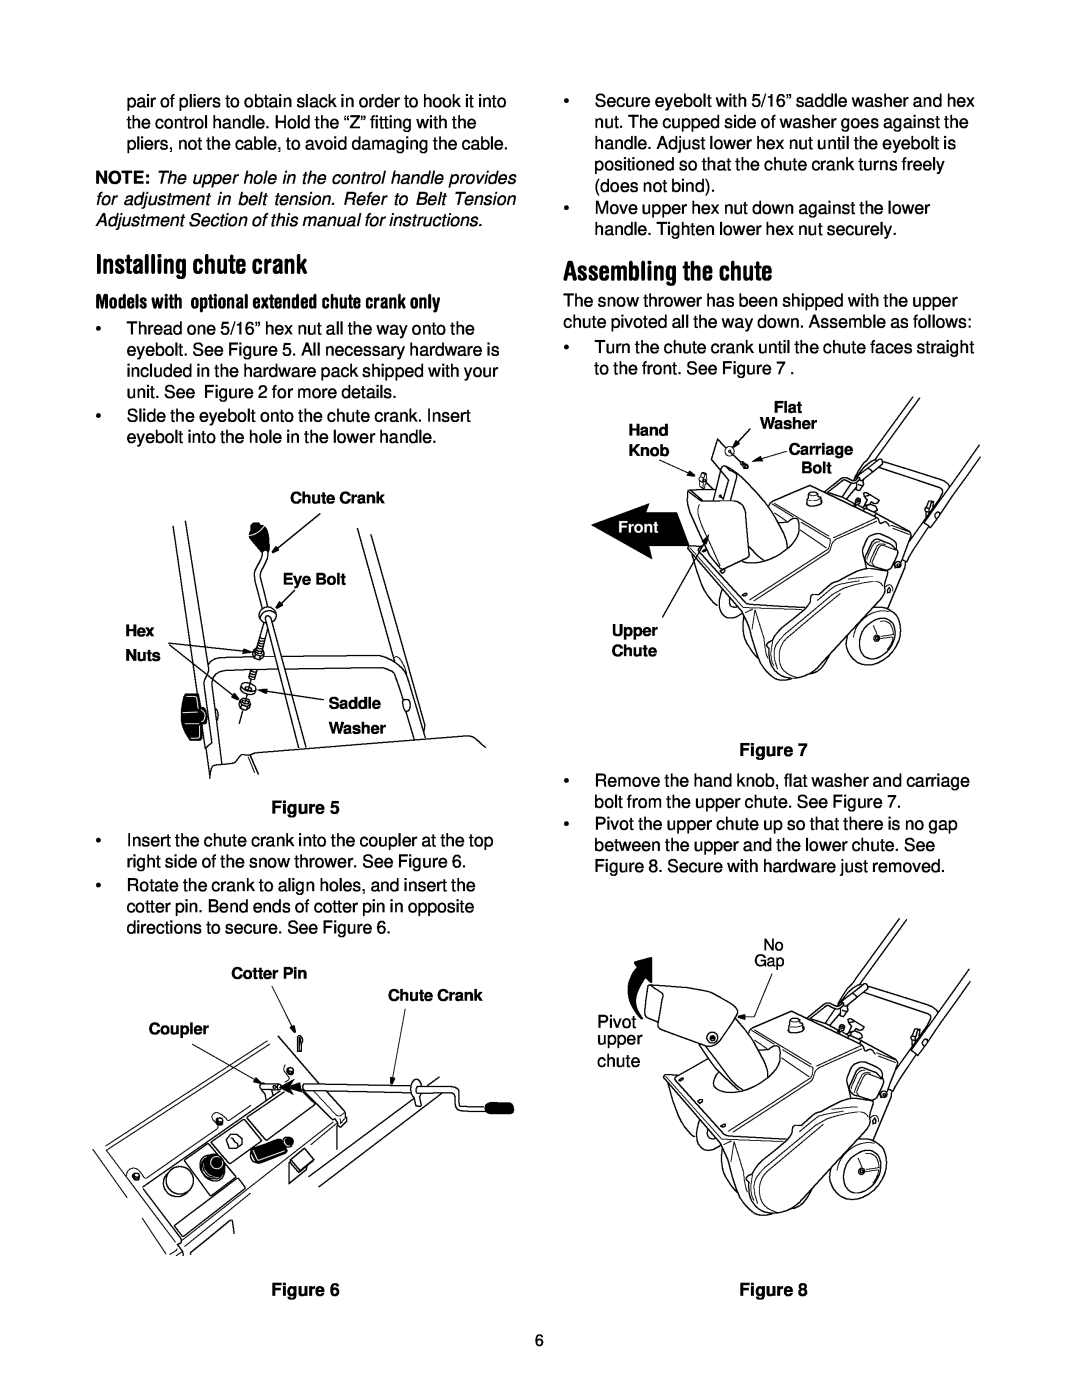 MTD Series 140 through E173 manual Installing chute crank, Assembling the chute 